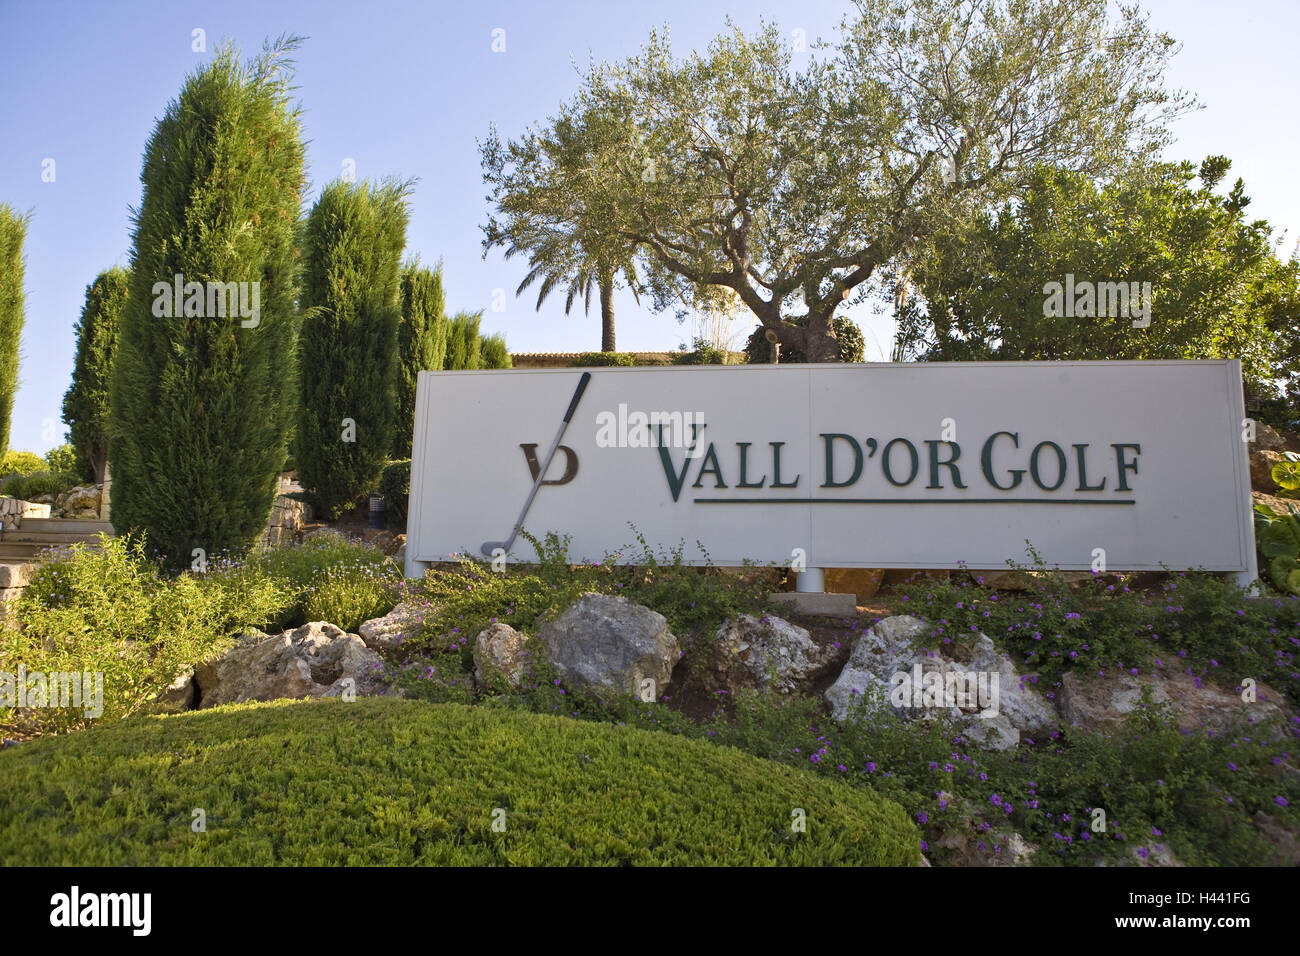 Spain, the Balearic Islands, island Majorca, golf course, Vall D'Or golf, sign, Stock Photo